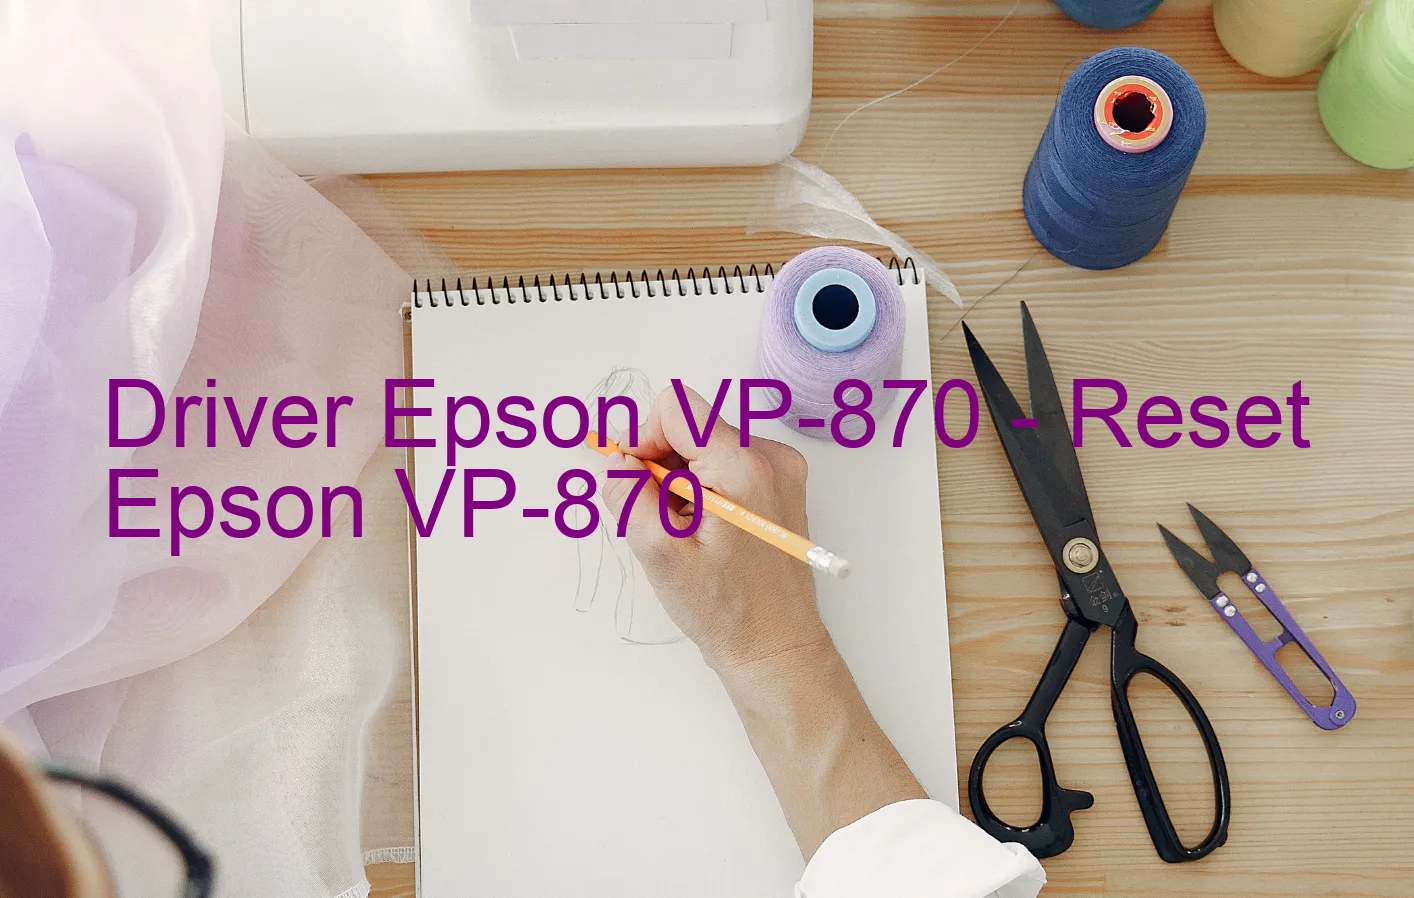 Epson VP-870のドライバー、Epson VP-870のリセットソフトウェア